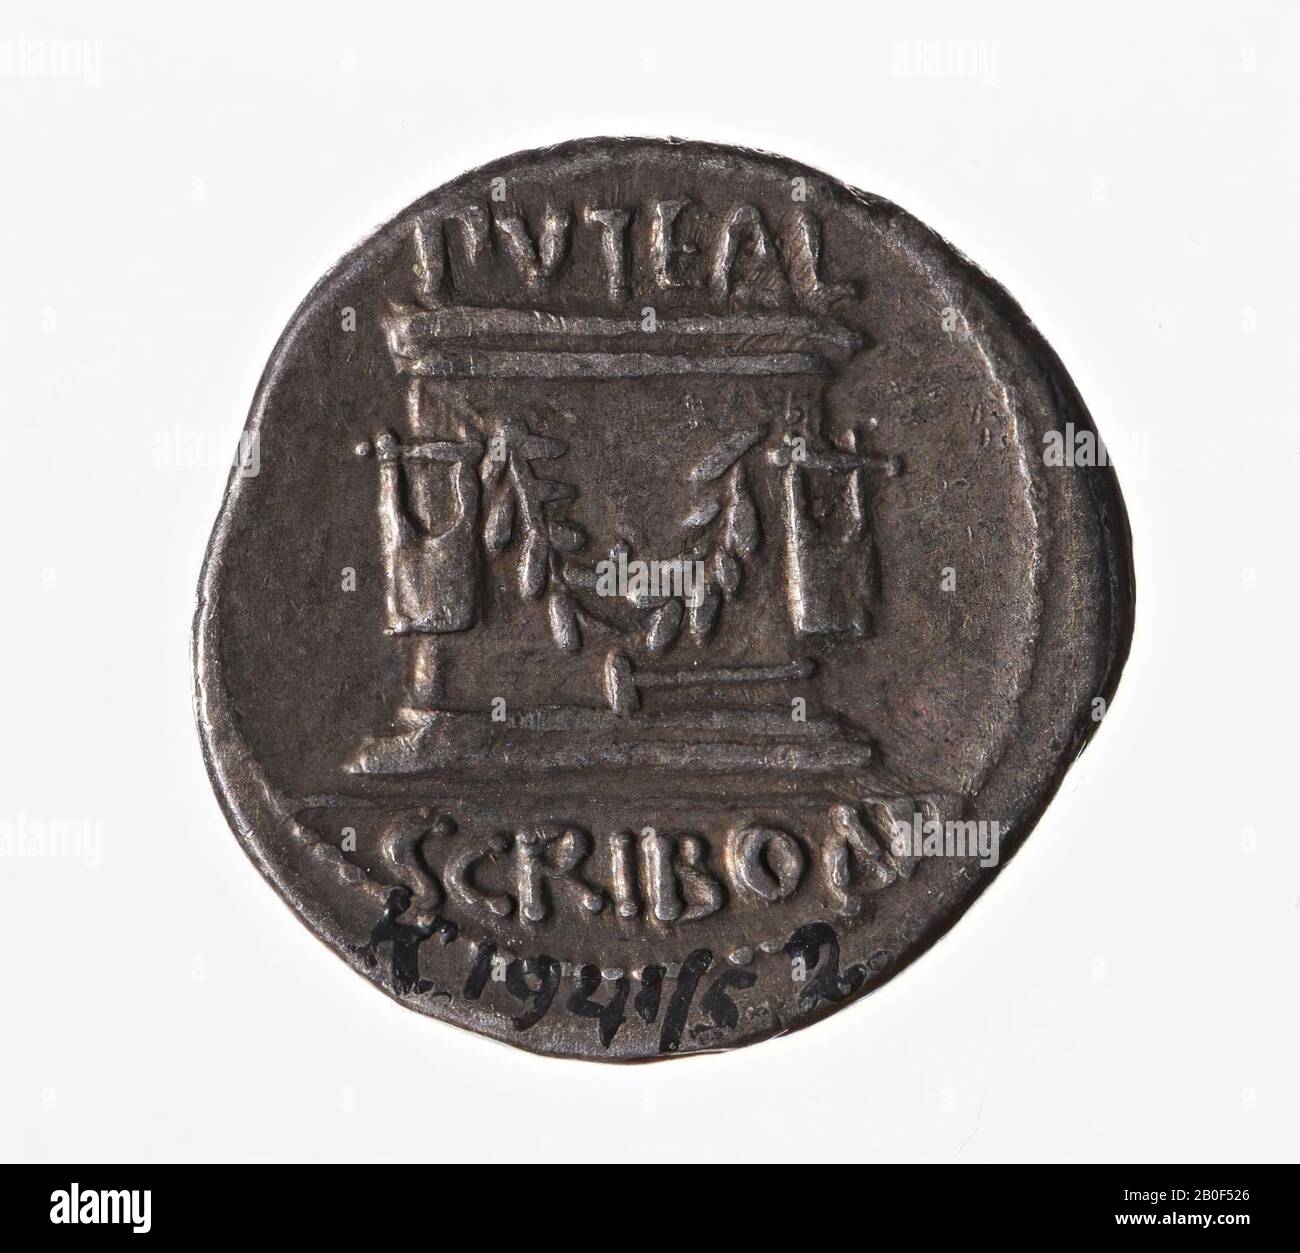 Vz: Bonus Eventus head r., LIBO BON EVENT, Kz: puteal scribonianum, PUTEAL SCRIBON, coin, denarius, L. Scribonius Libo, metal, silver, Diam. 19 mm, wt. 3.83 gr, Roman BC 62, Italy Stock Photo